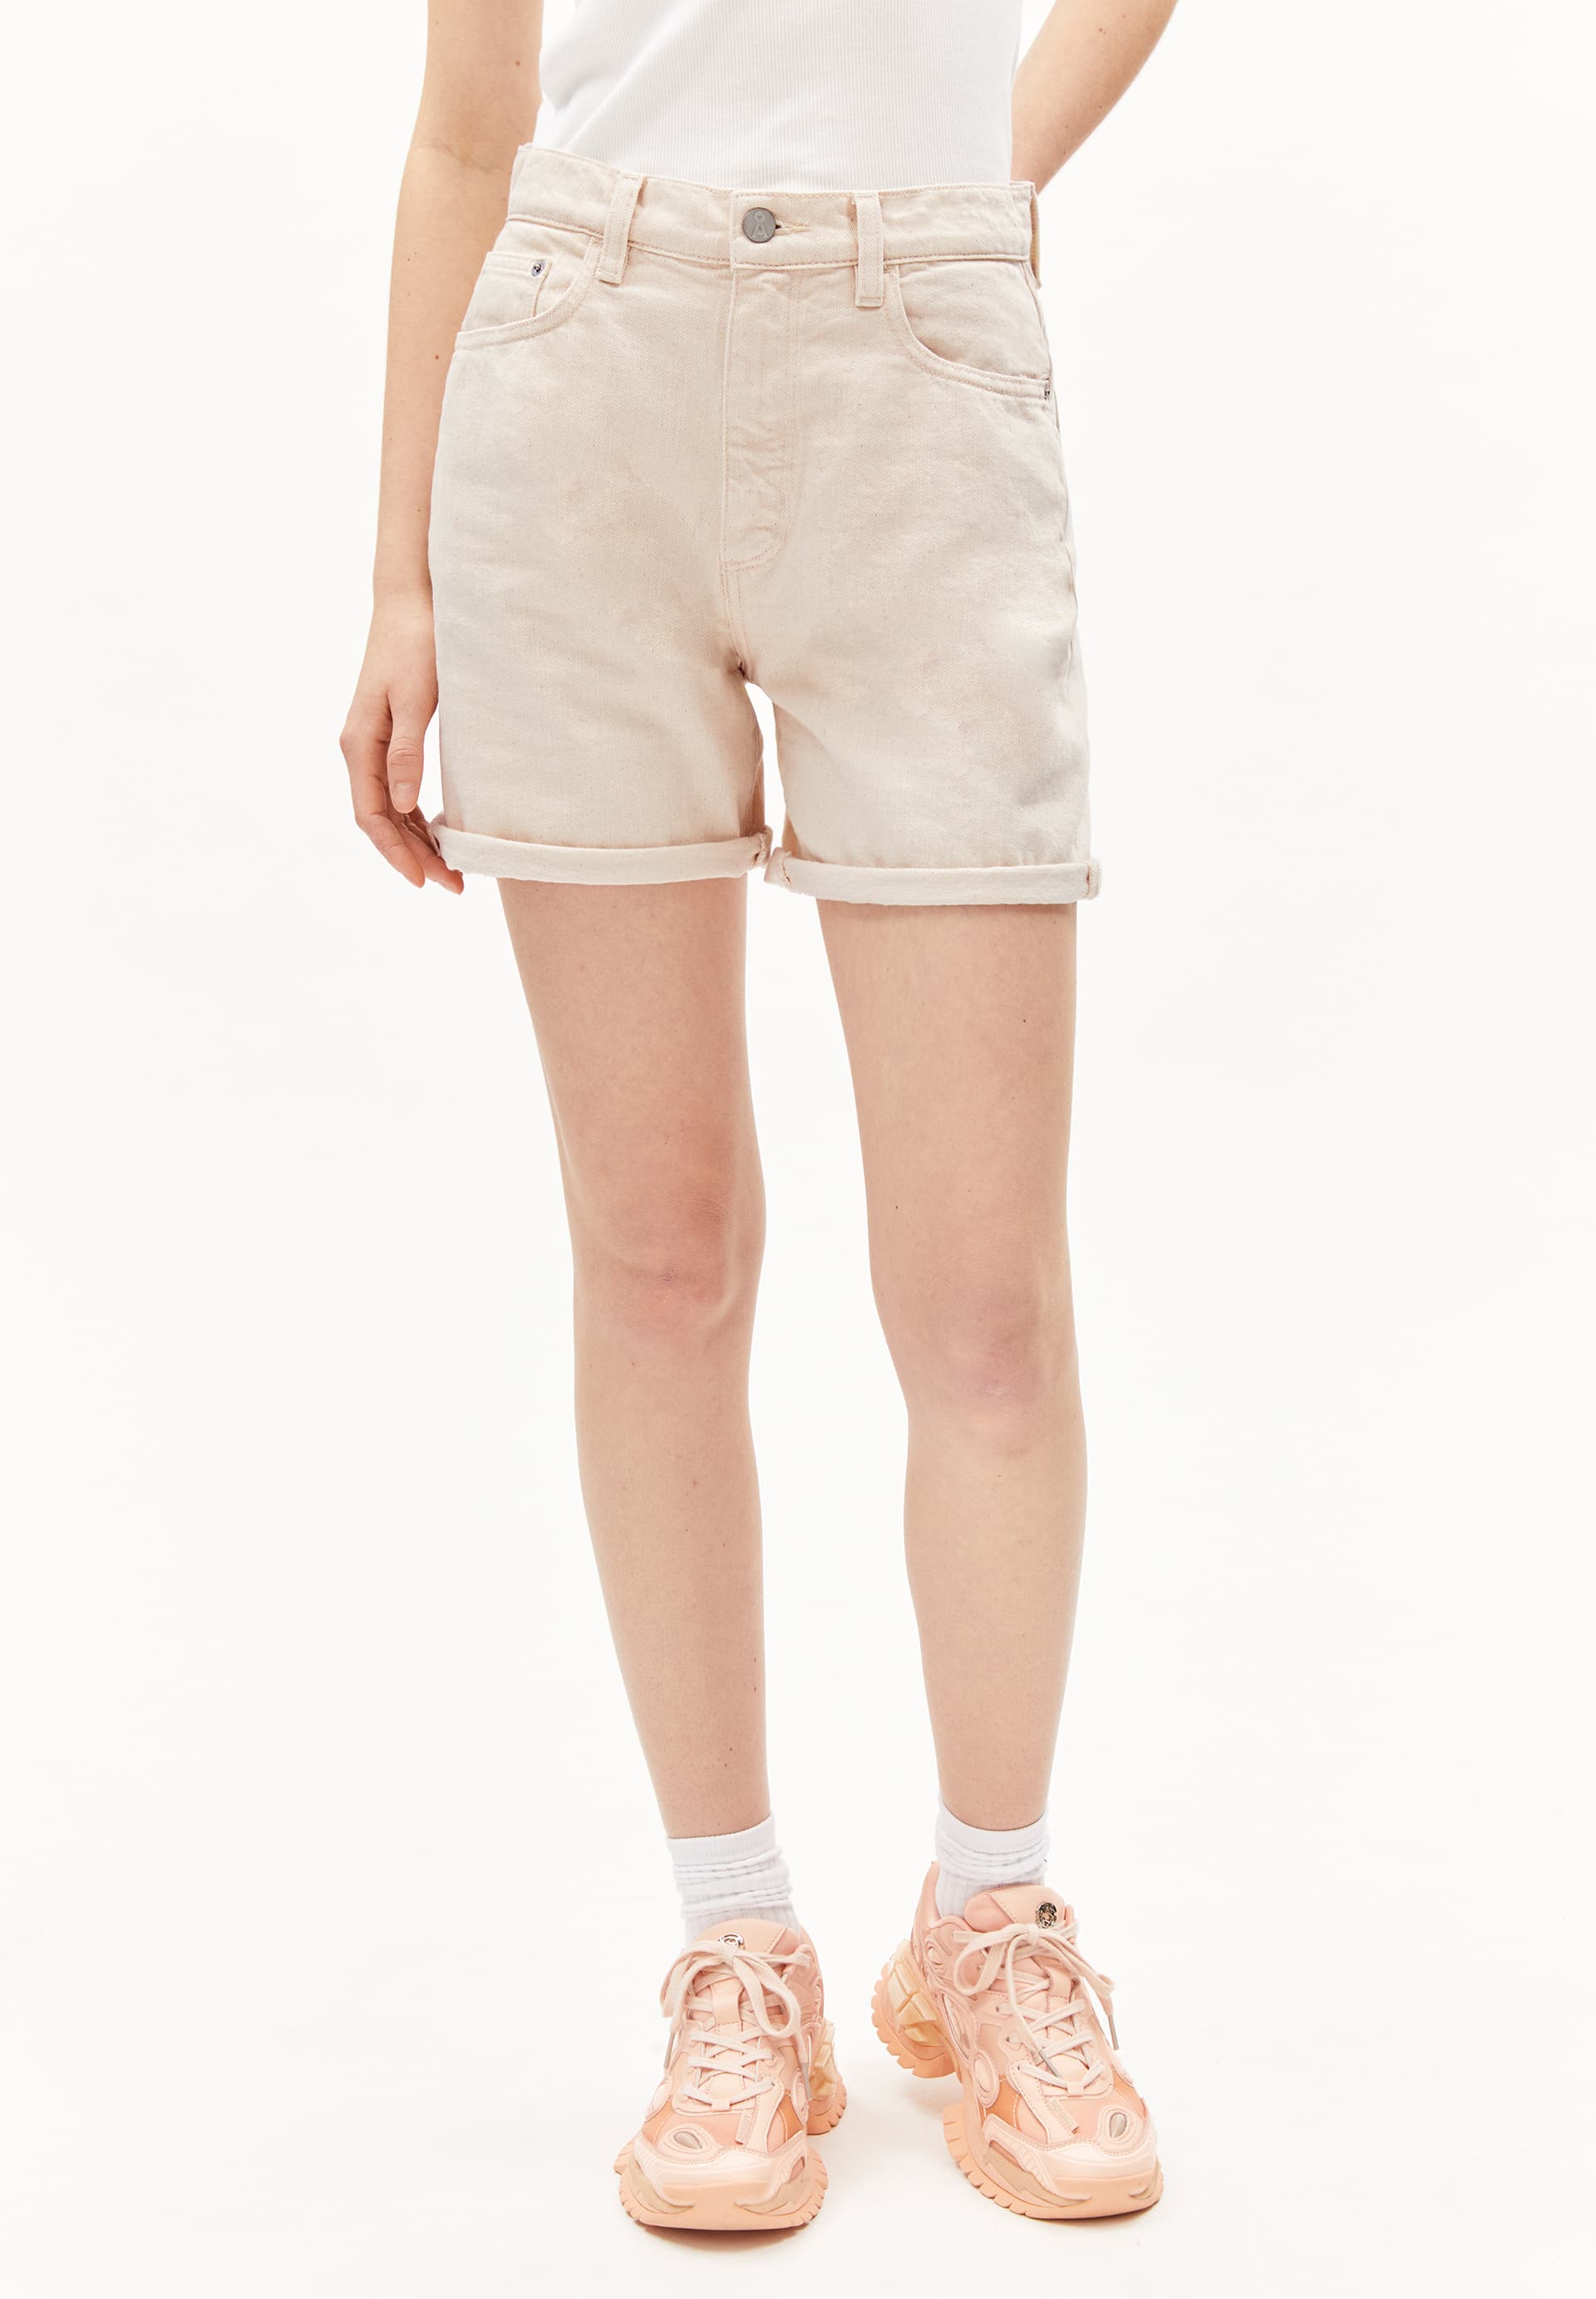 SHEAARI UNDYED Denim Shorts made of Organic Cotton Mix